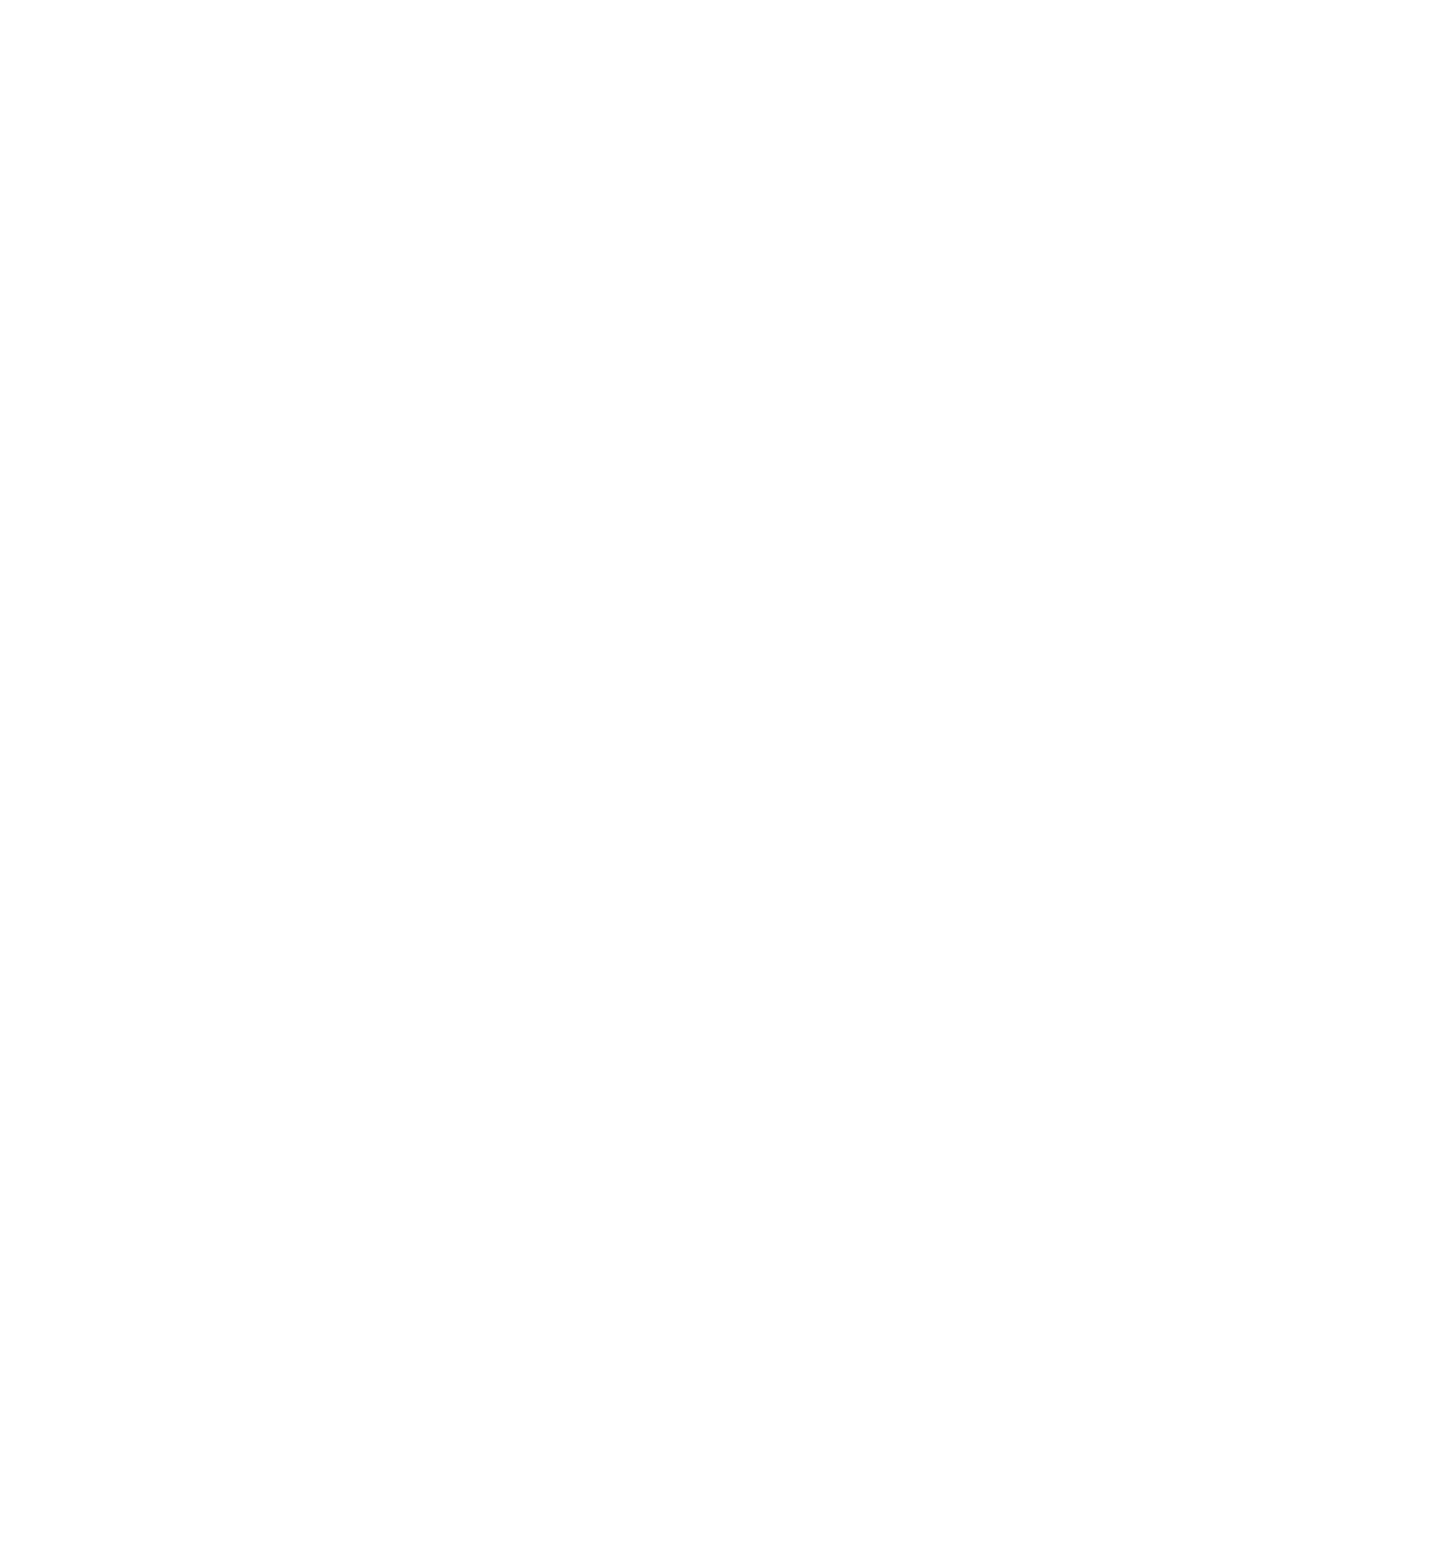 Perficient logo for dark backgrounds (transparent PNG)